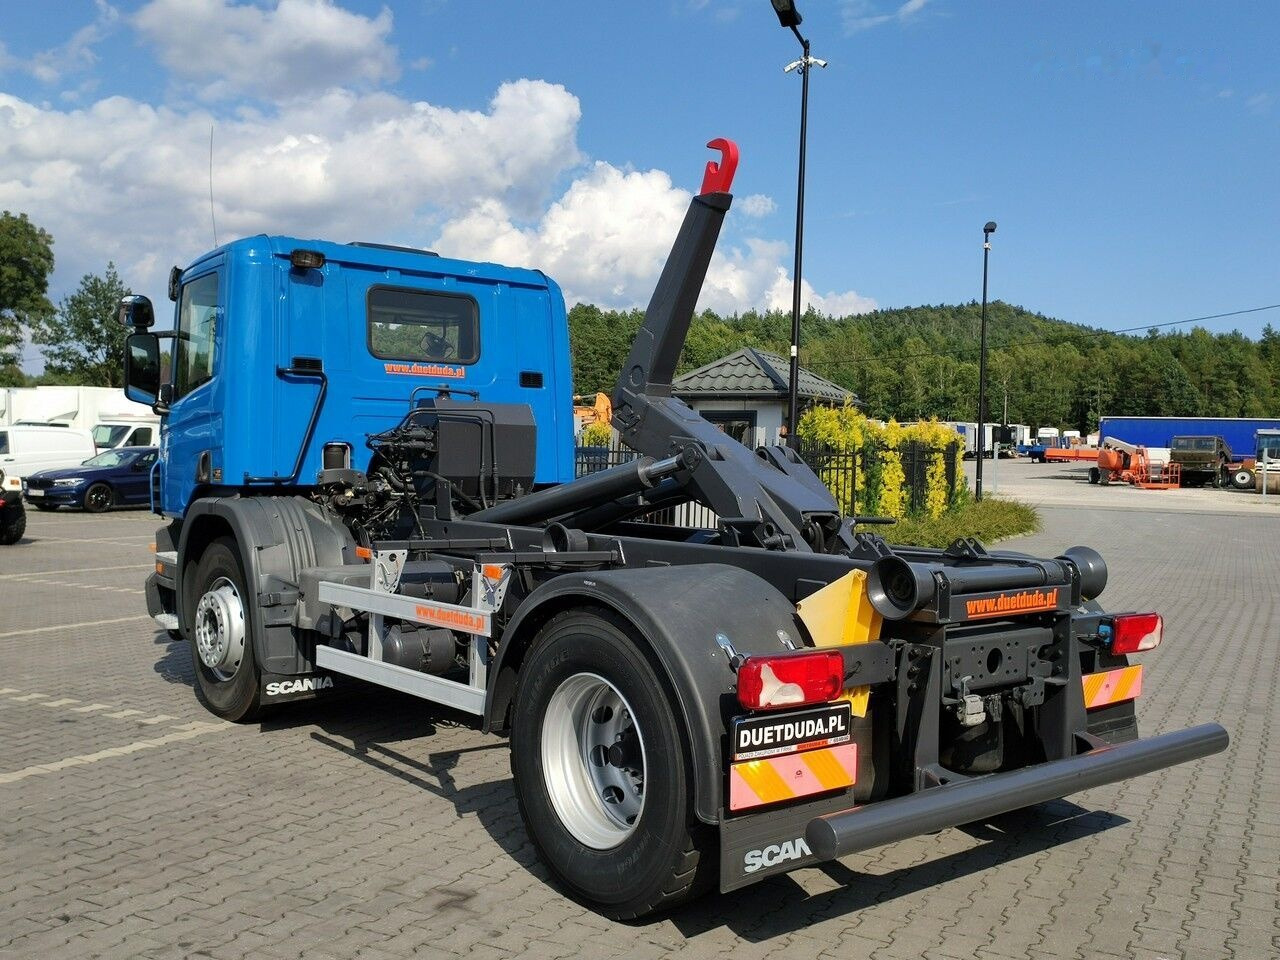 Hook lift truck Scania P 280